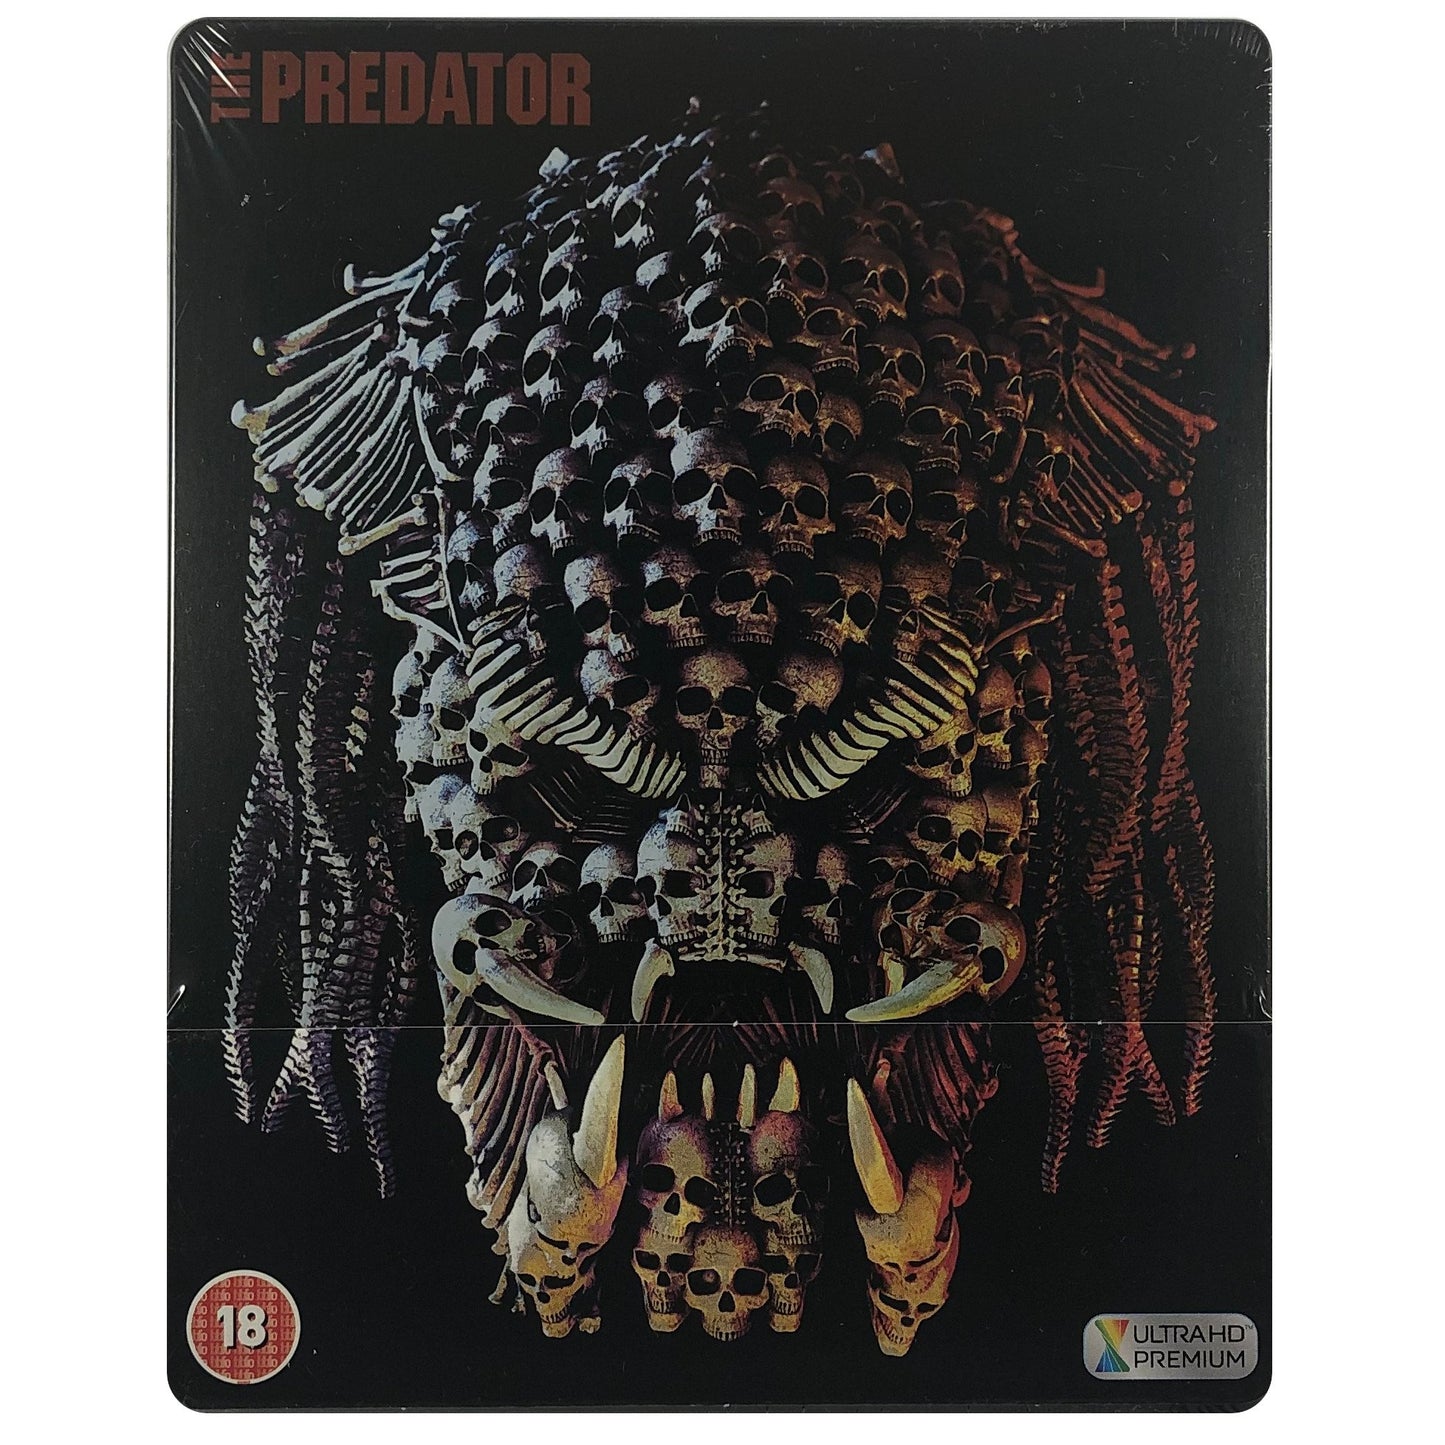 The Predator 4K Steelbook